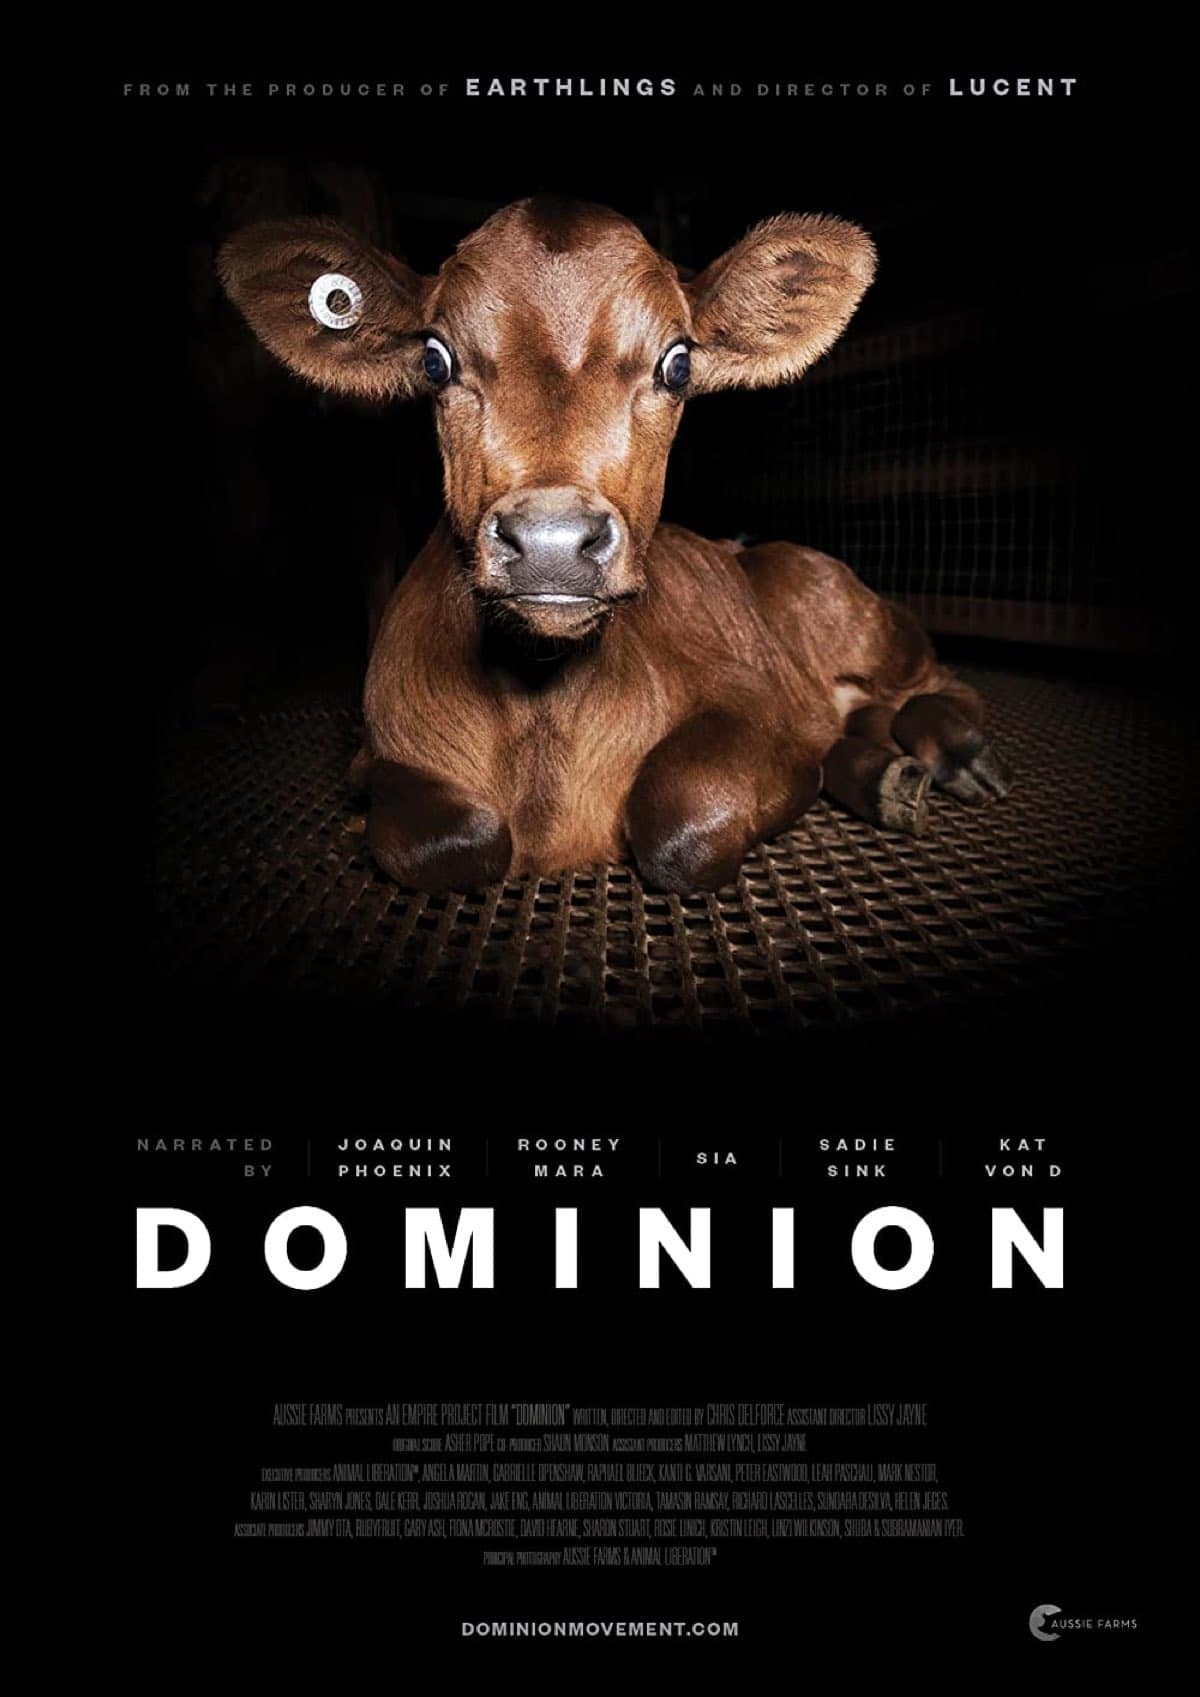 Dominion animal rights documentary featuring Joaquin Phoenix. 